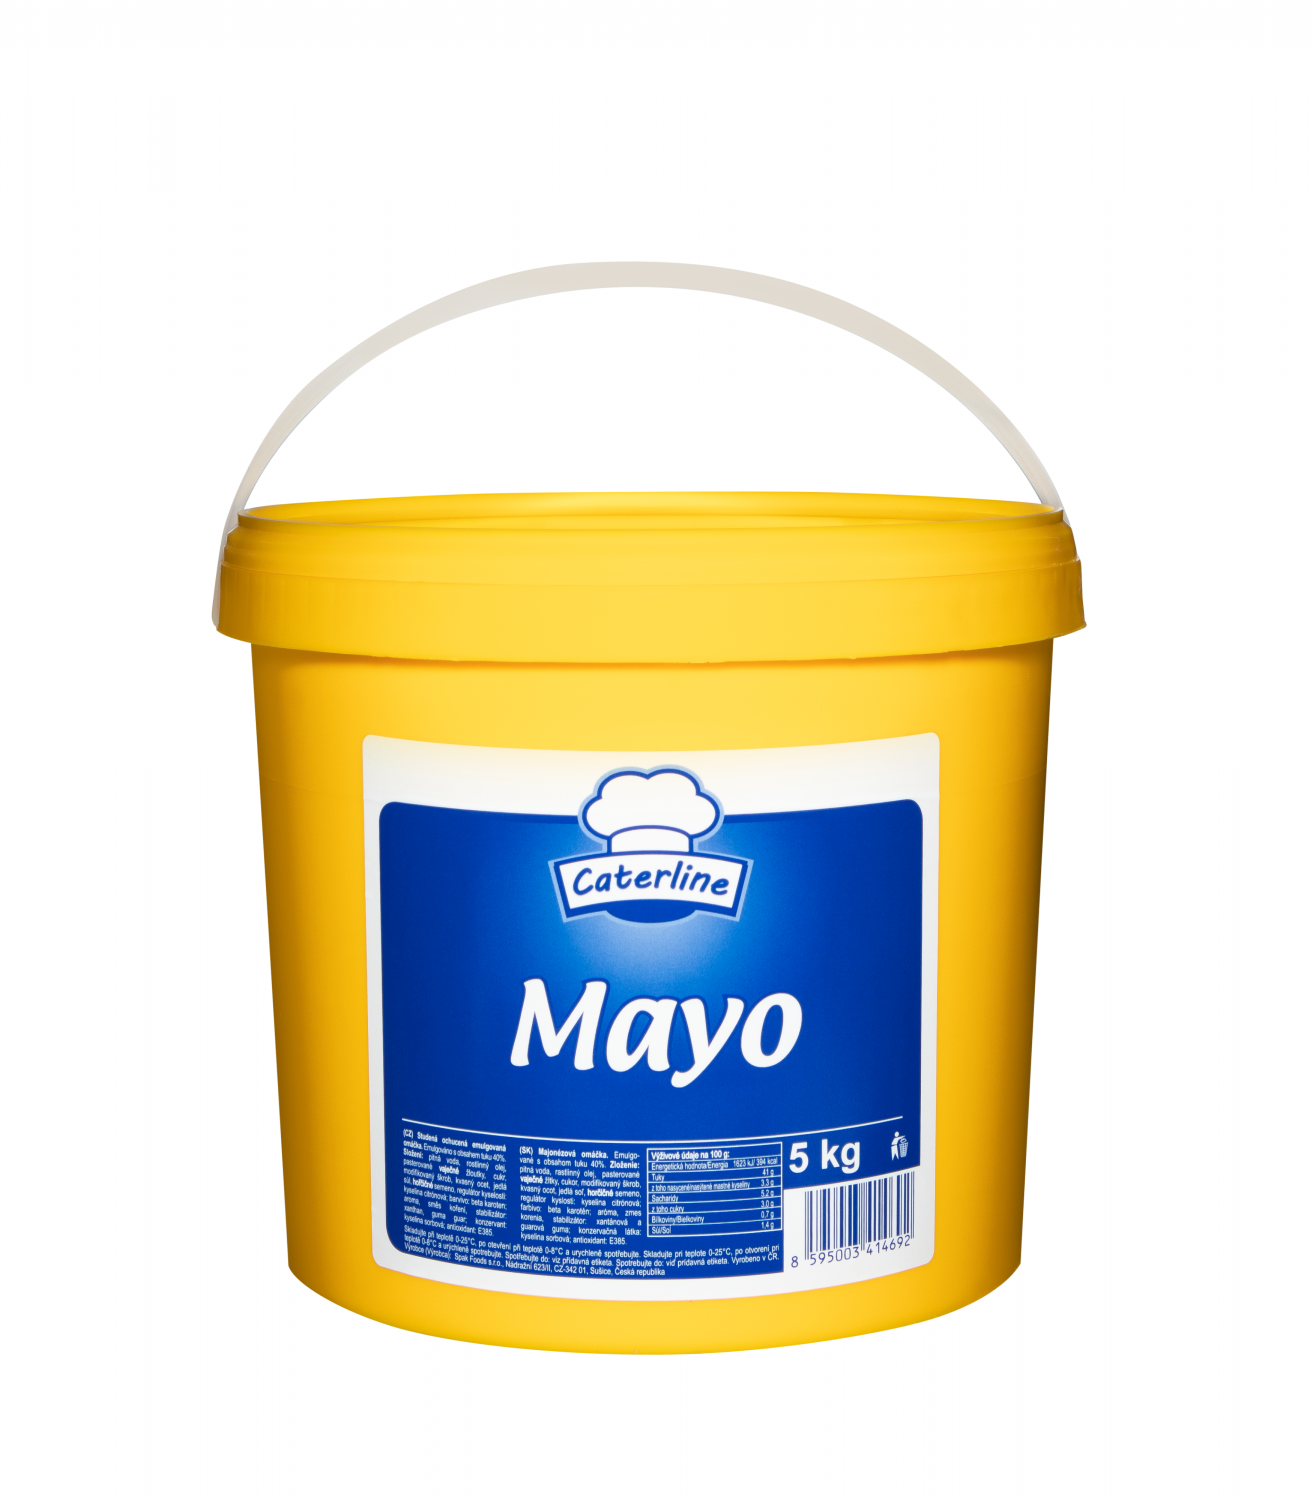 Mayo-Caterline-5kg-1